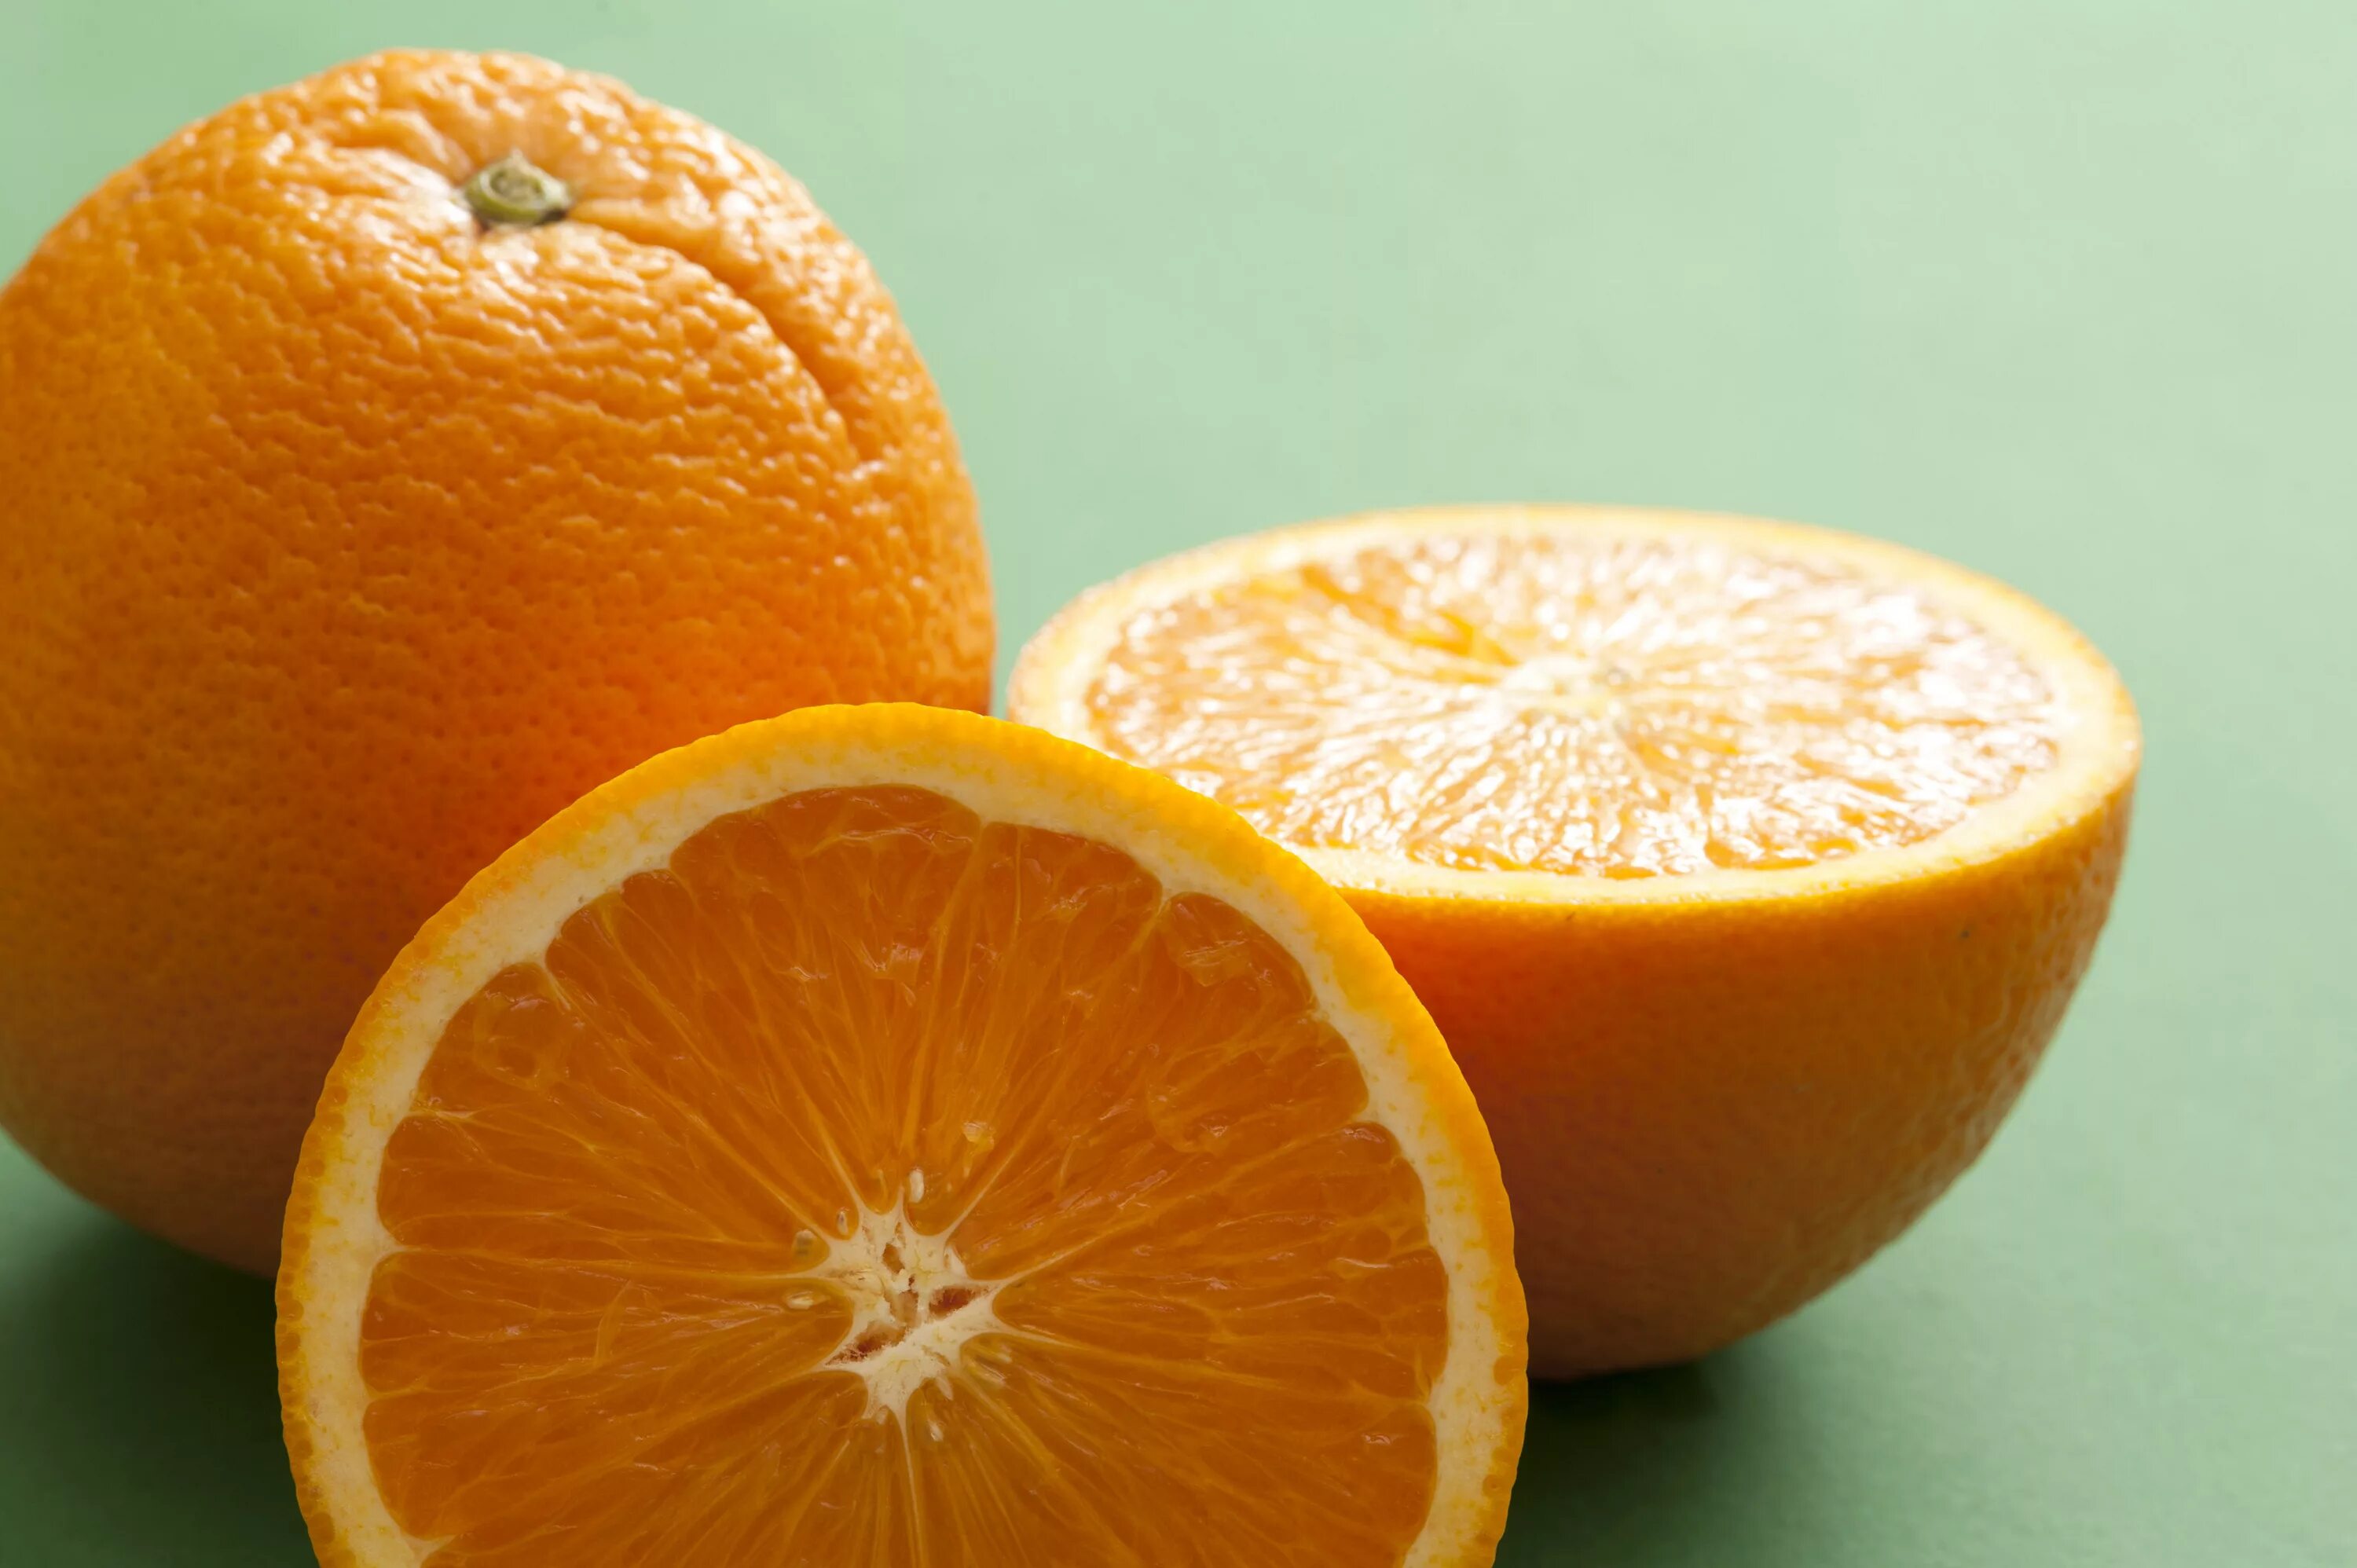 Apelsin 1:1. Апельсин (плод). Оранжевый апельсин. Срез апельсина. Orange choose